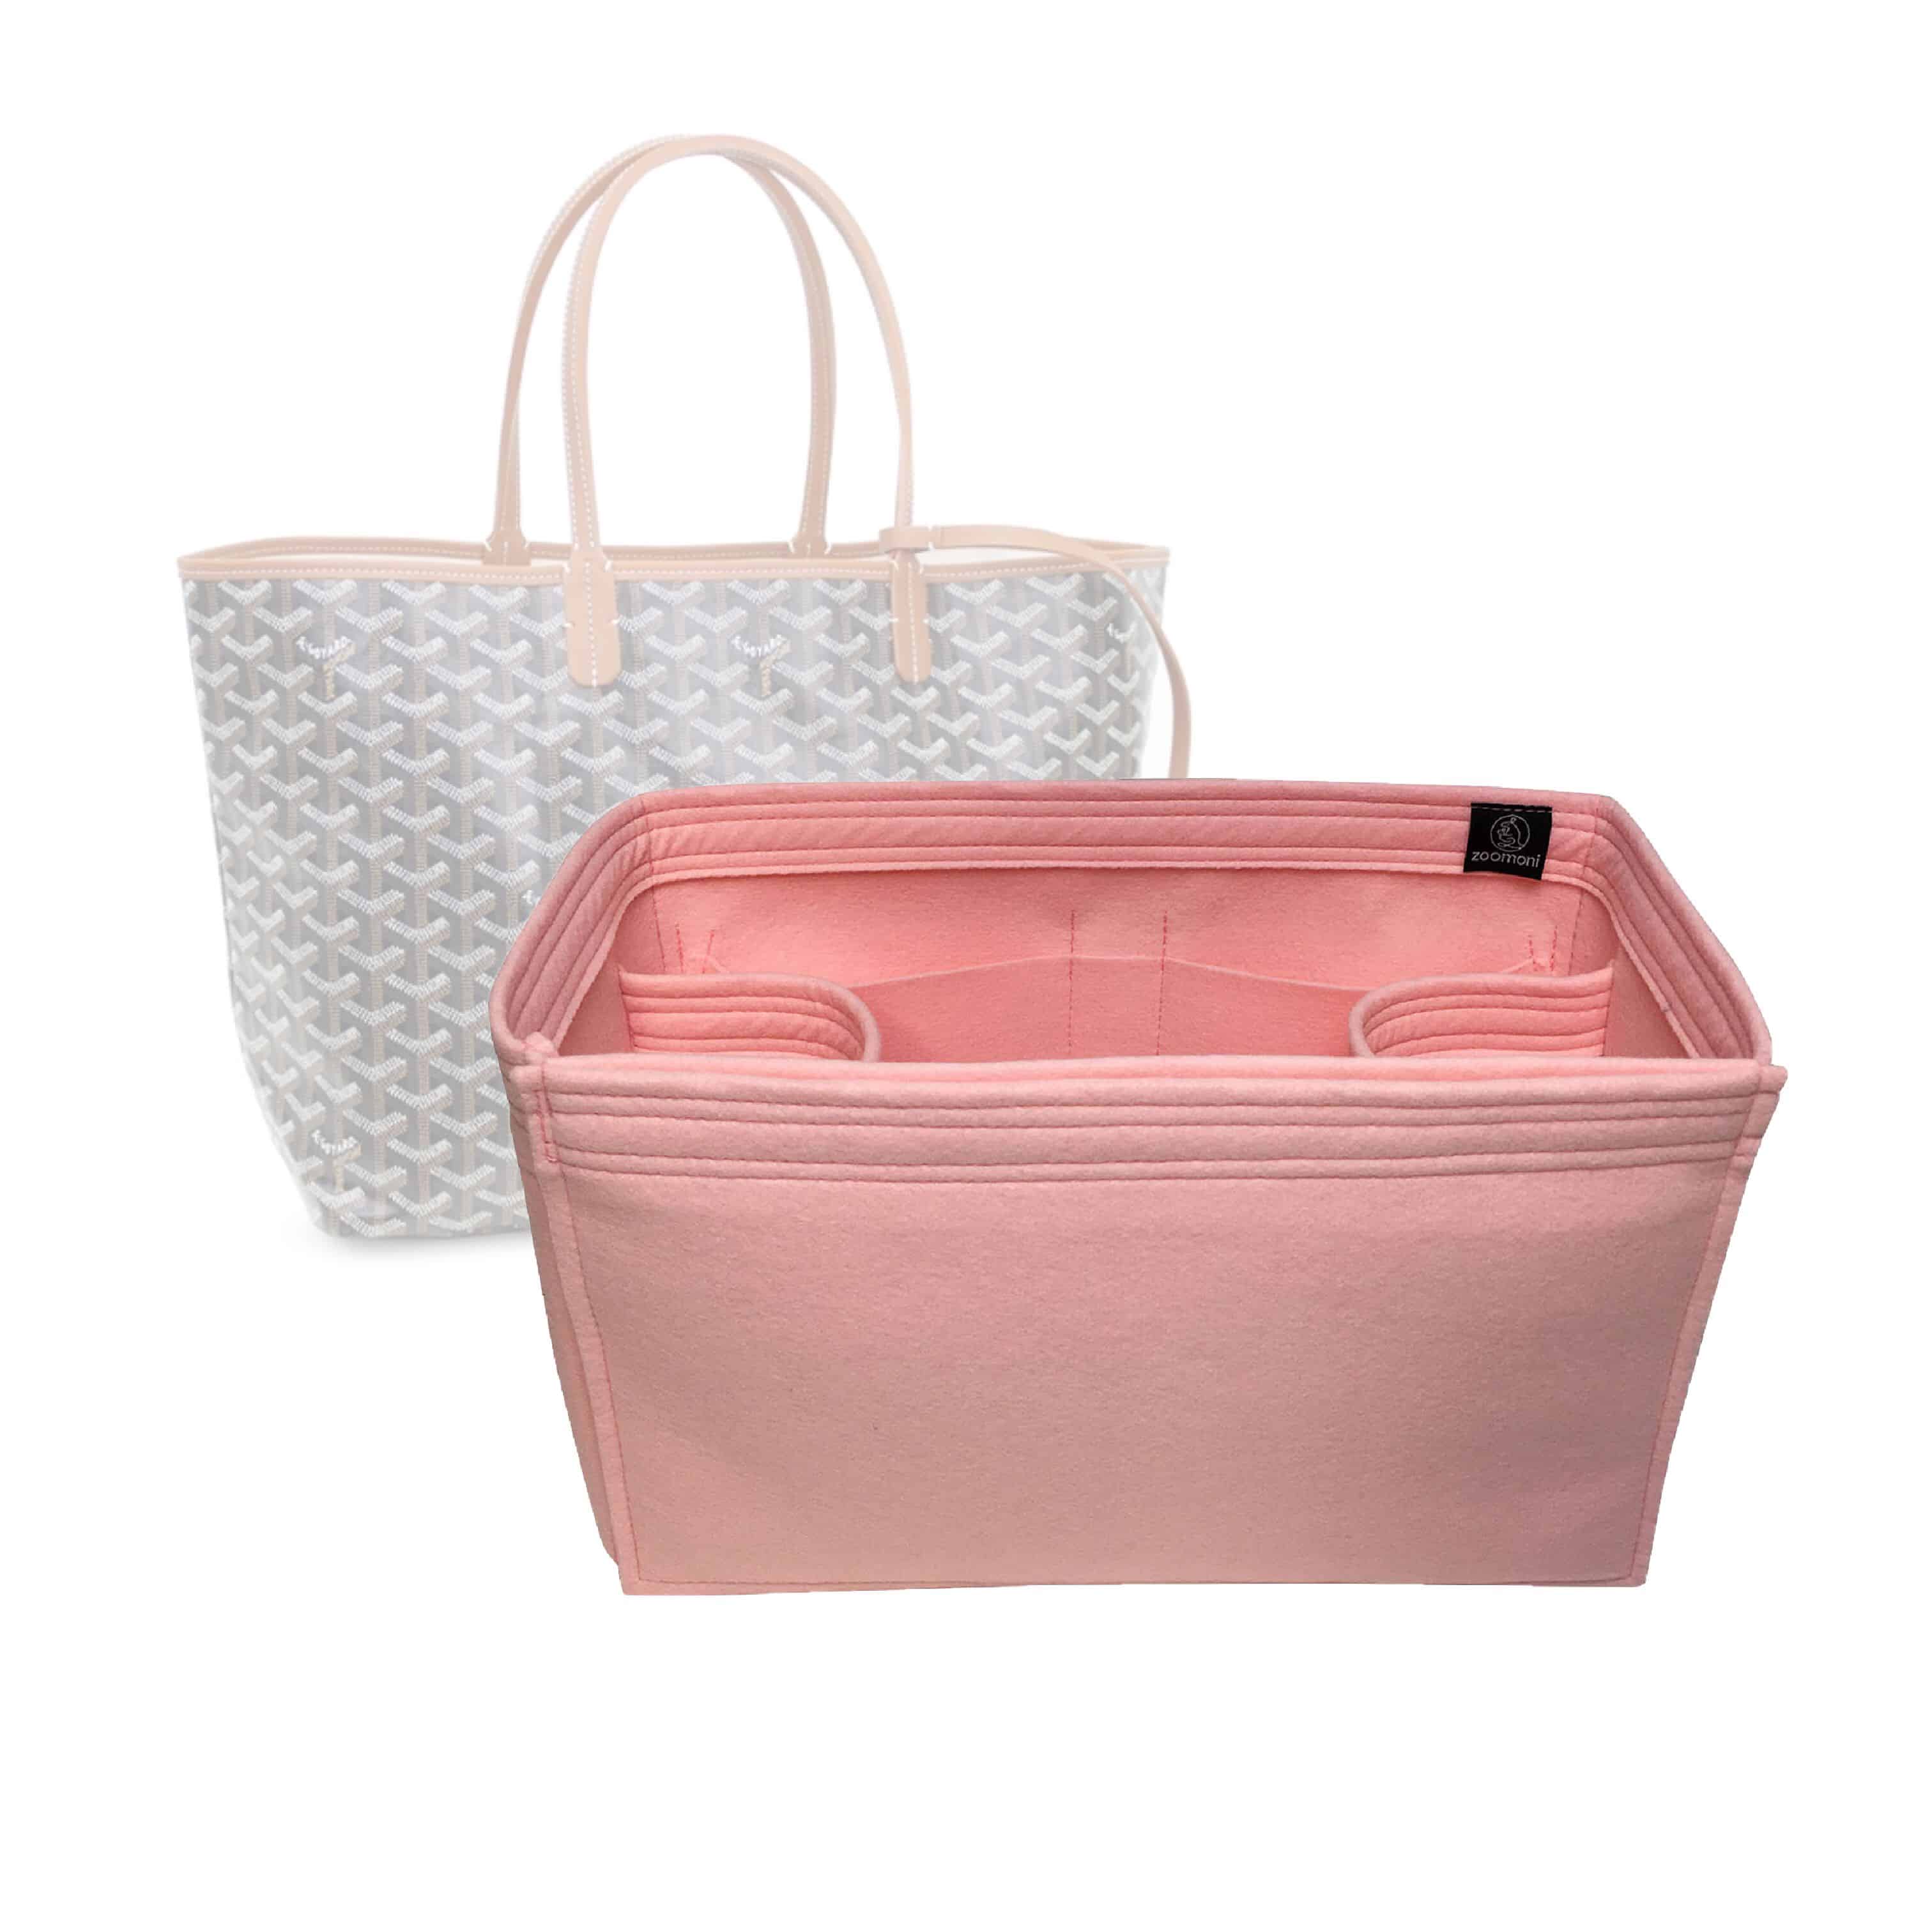  Zoomoni Premium Bag Organizer for Anjou Mini Bag (Handmade/20  Color Options) [Purse Organiser, Liner, Insert, Shaper] : Handmade Products